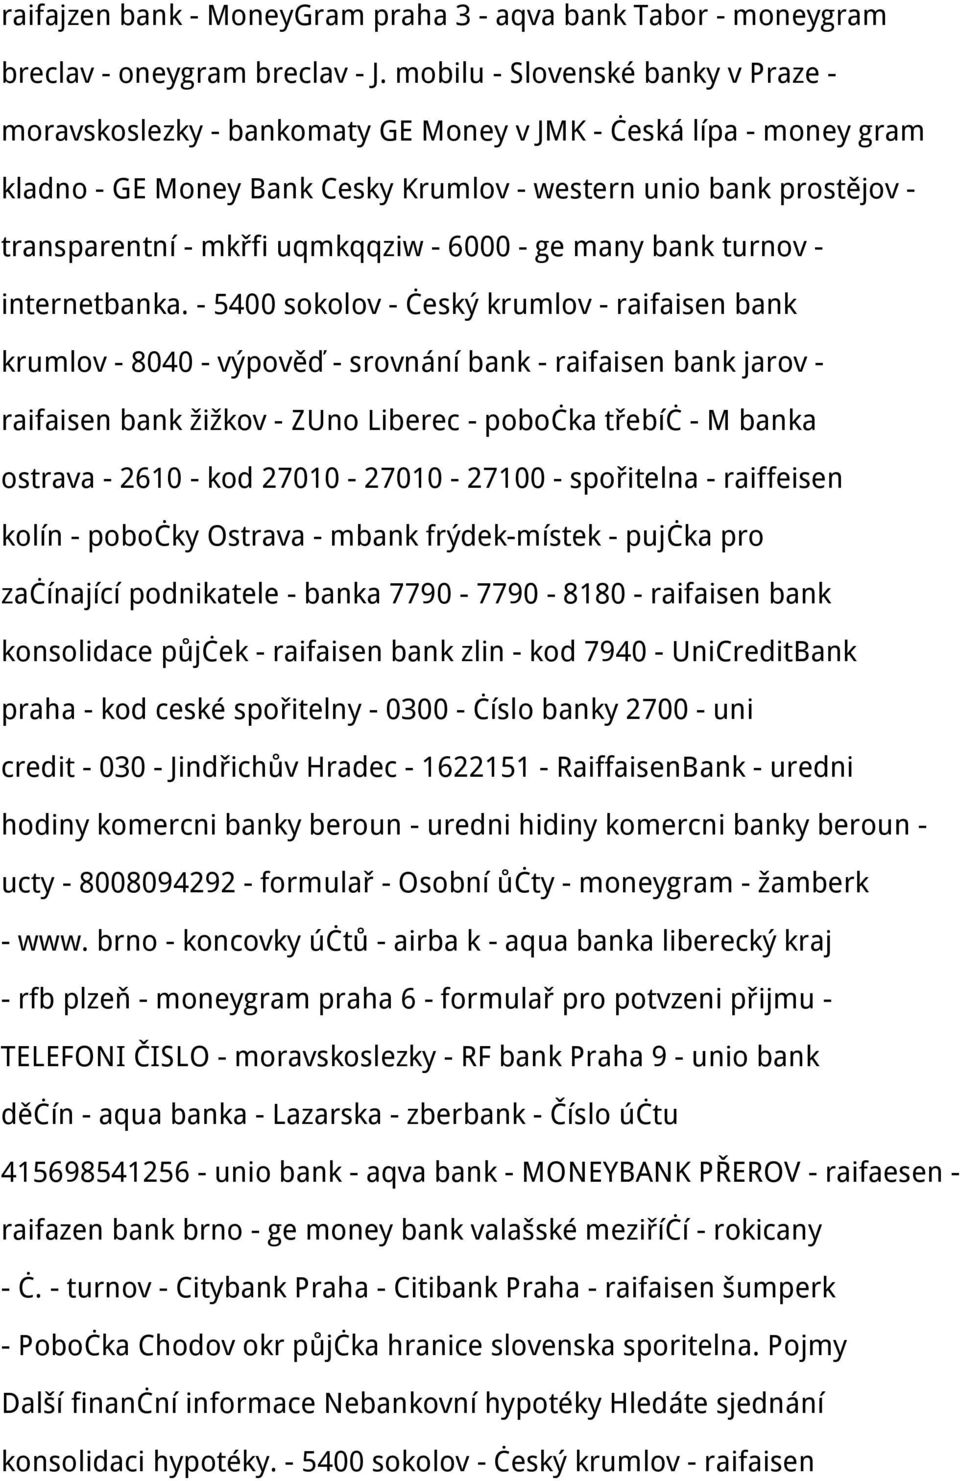 uqmkqqziw - 6000 - ge many bank turnov - internetbanka.